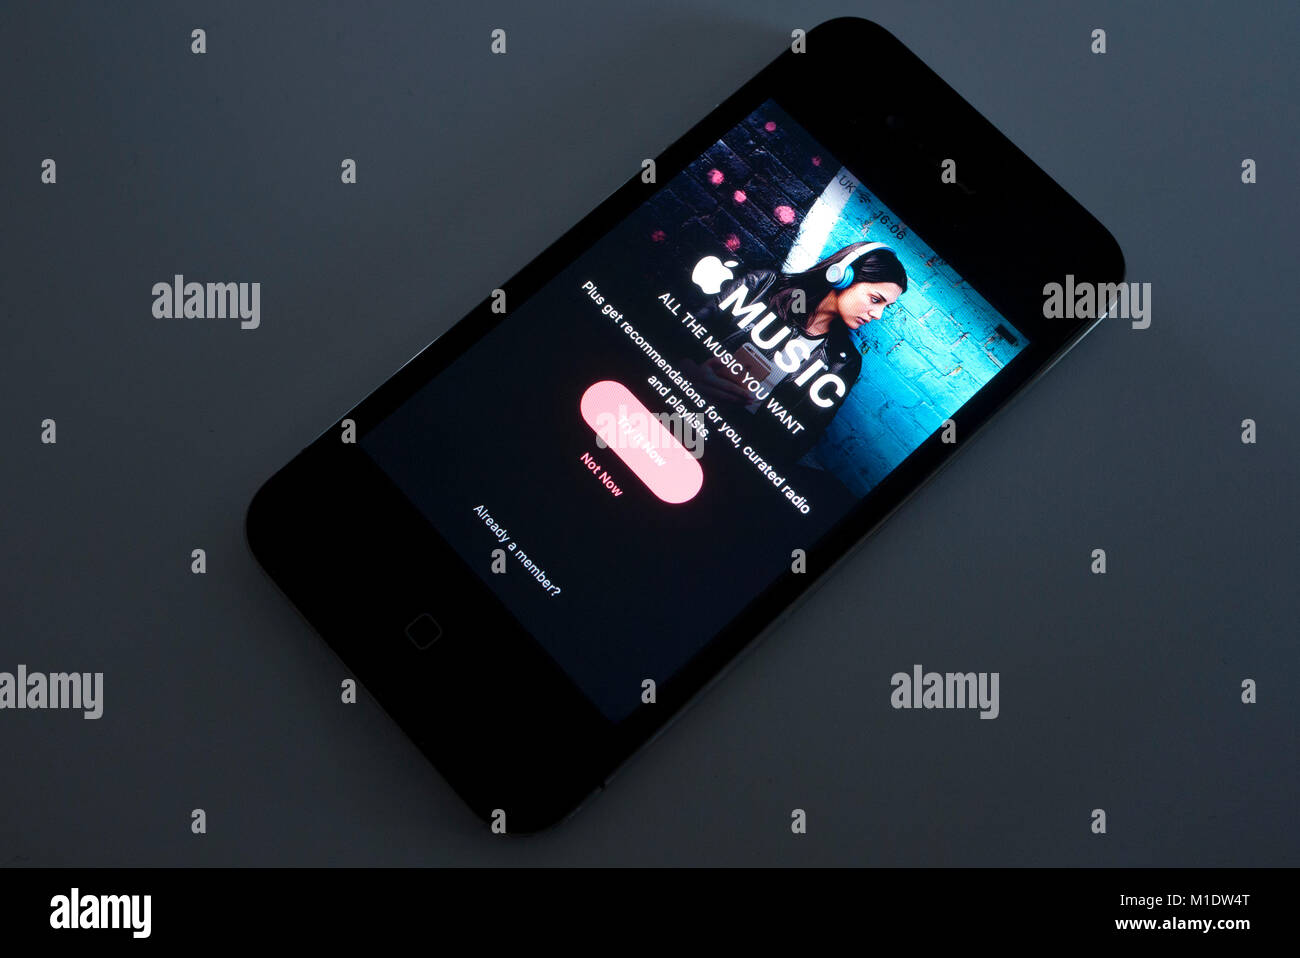 Apple music app on a Iphone 4s, UK. Stock Photo